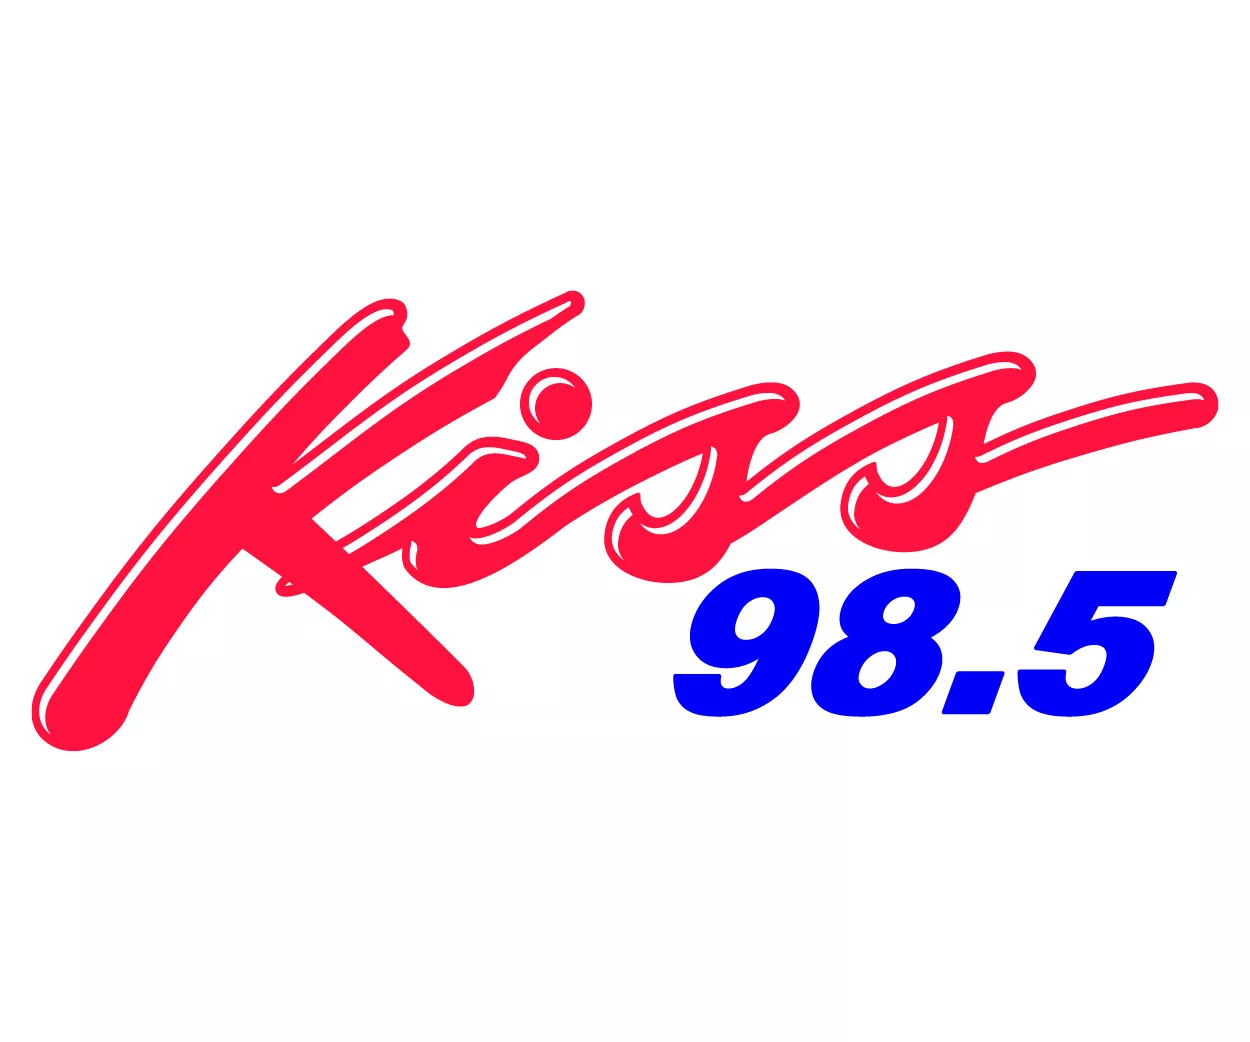 23TT - Kiss 98.5 logo